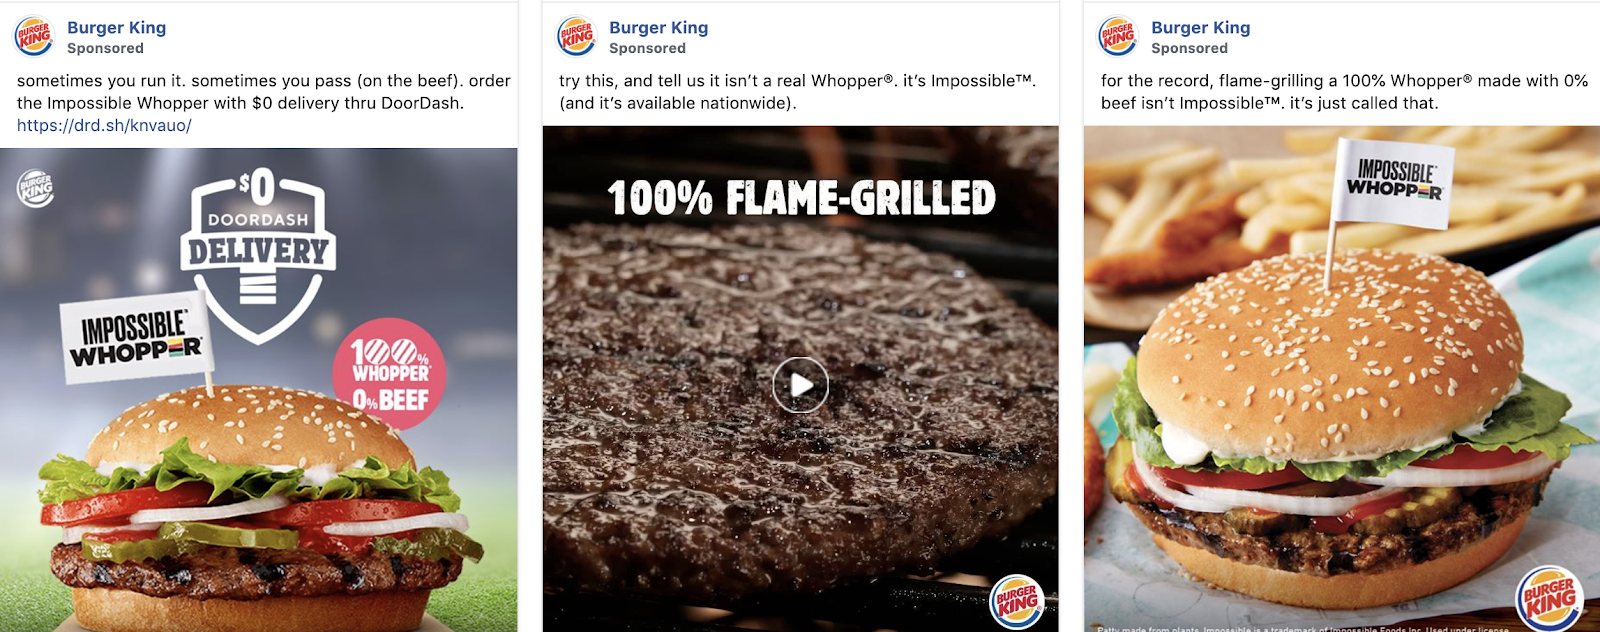 Global Marketing Strategy: Screenshot of Burger King